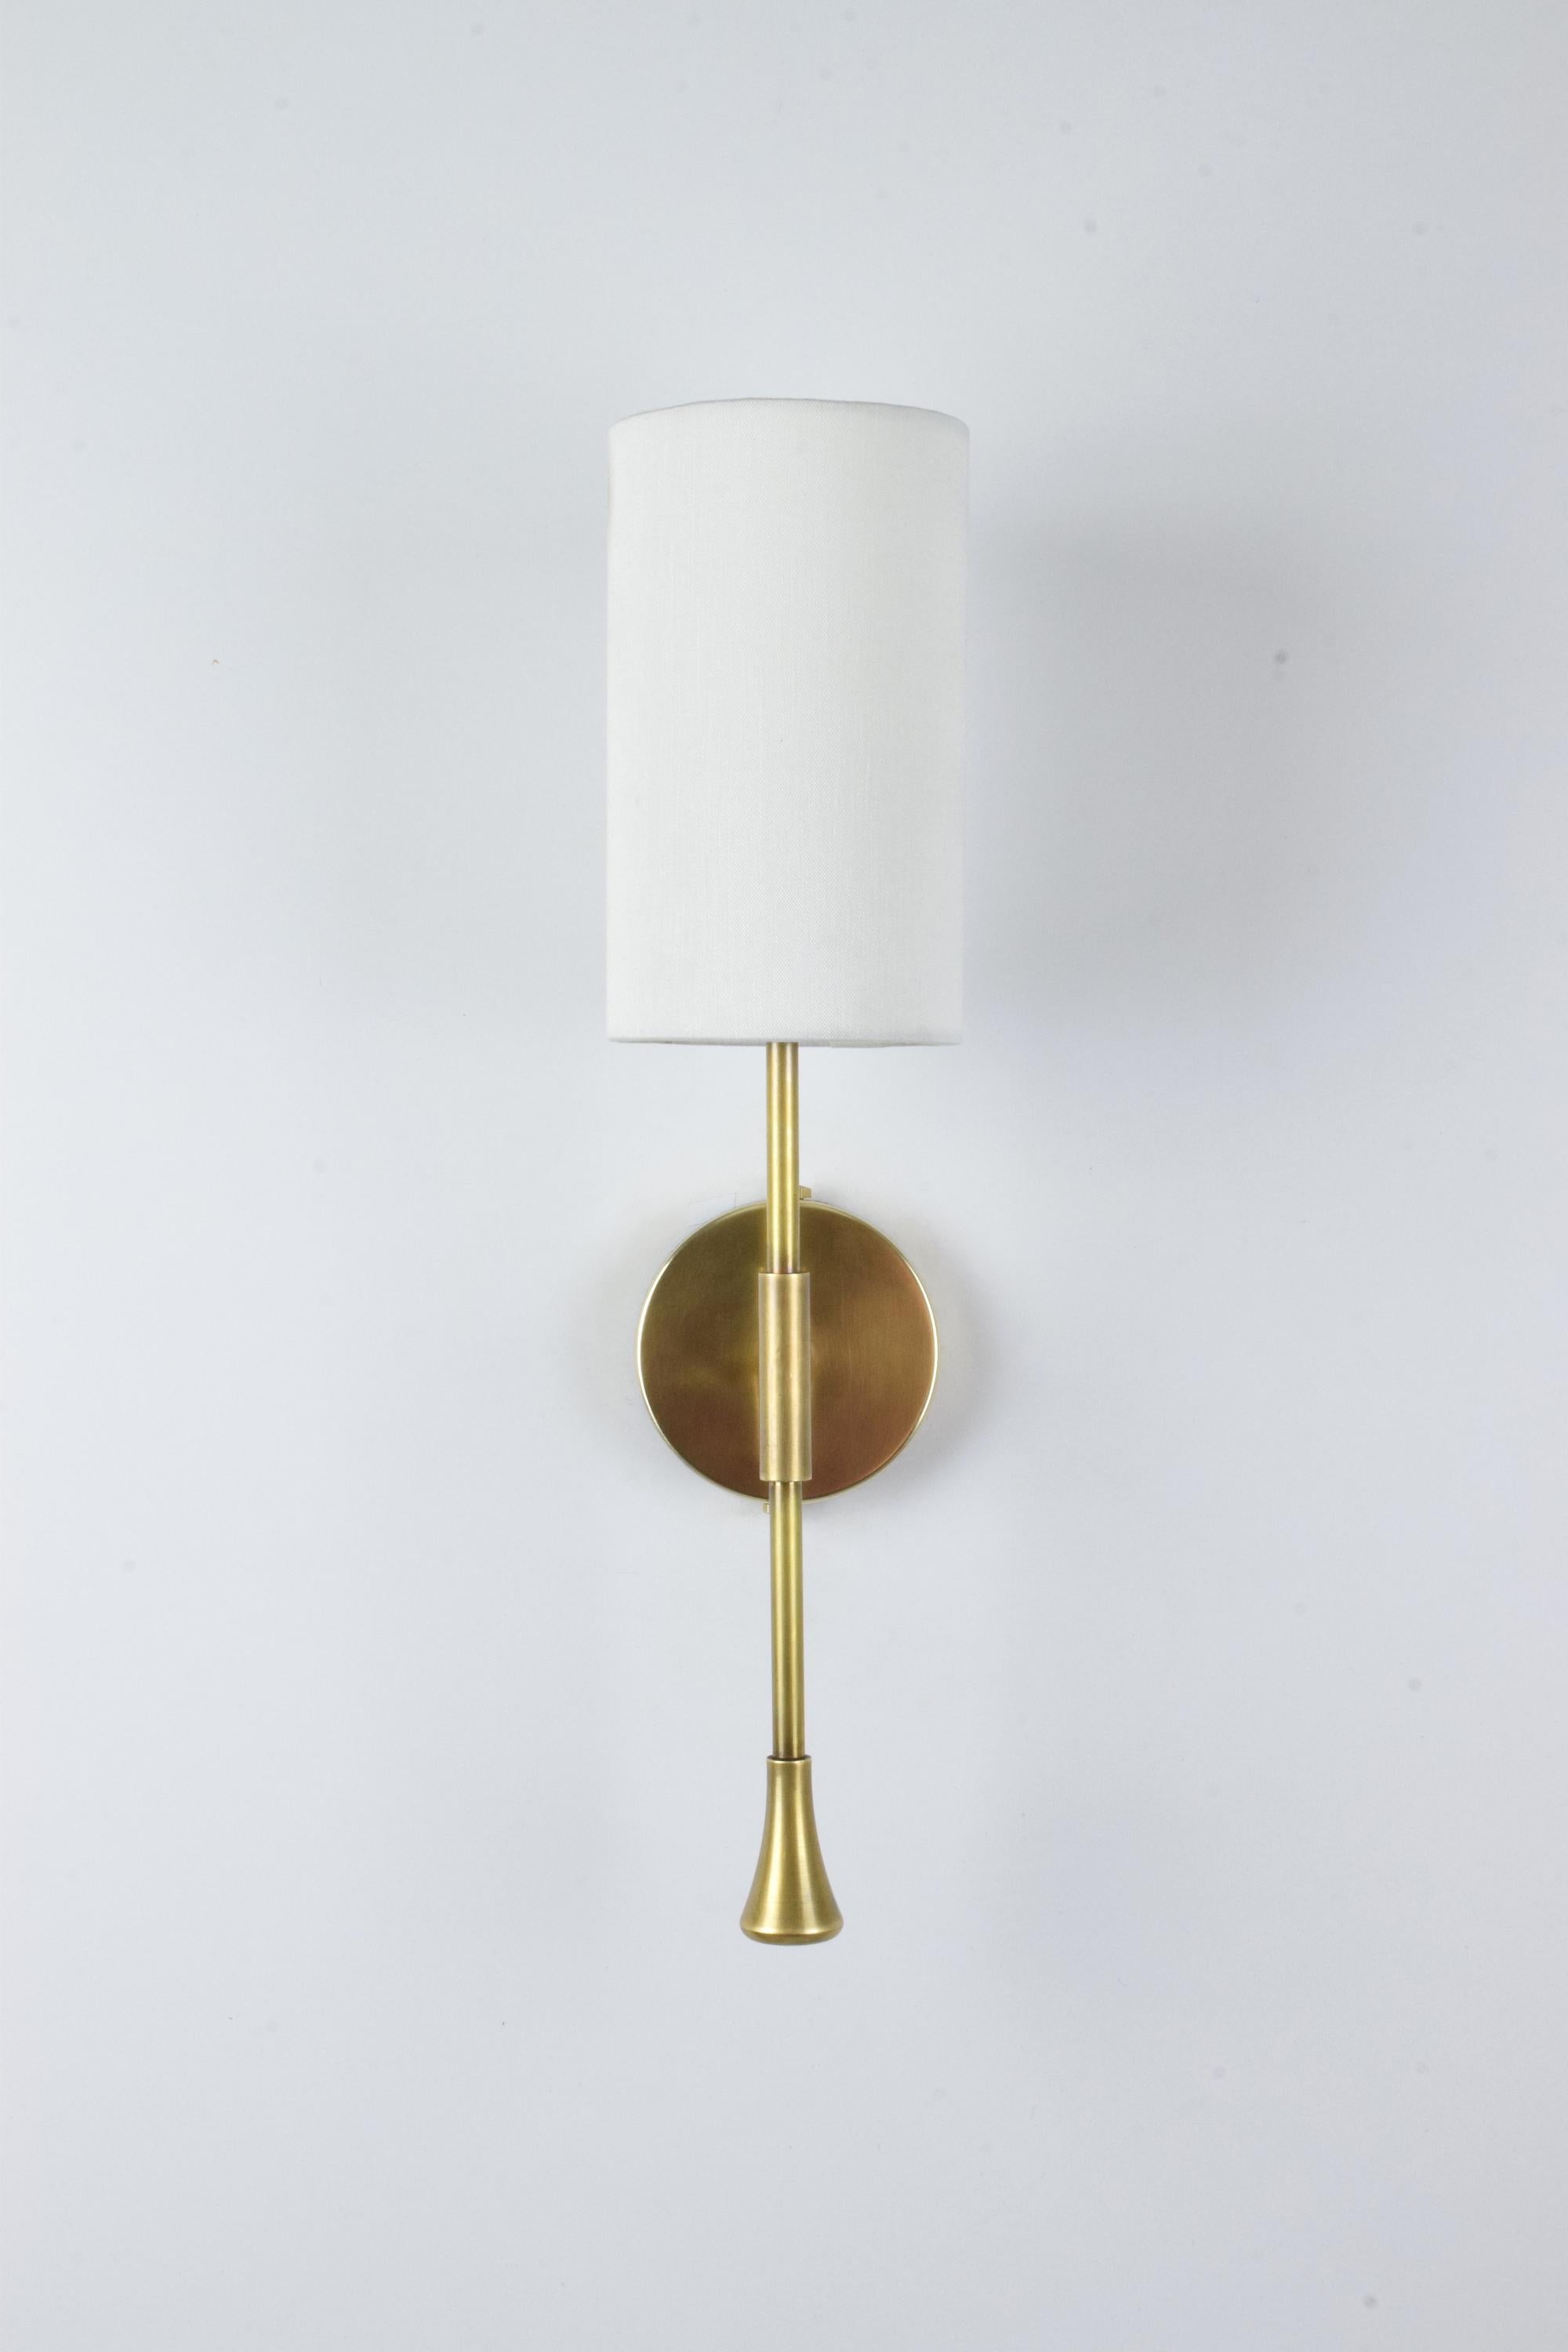 Modern DAYA-W Brass Wall Light, Flow 2 Collection For Sale